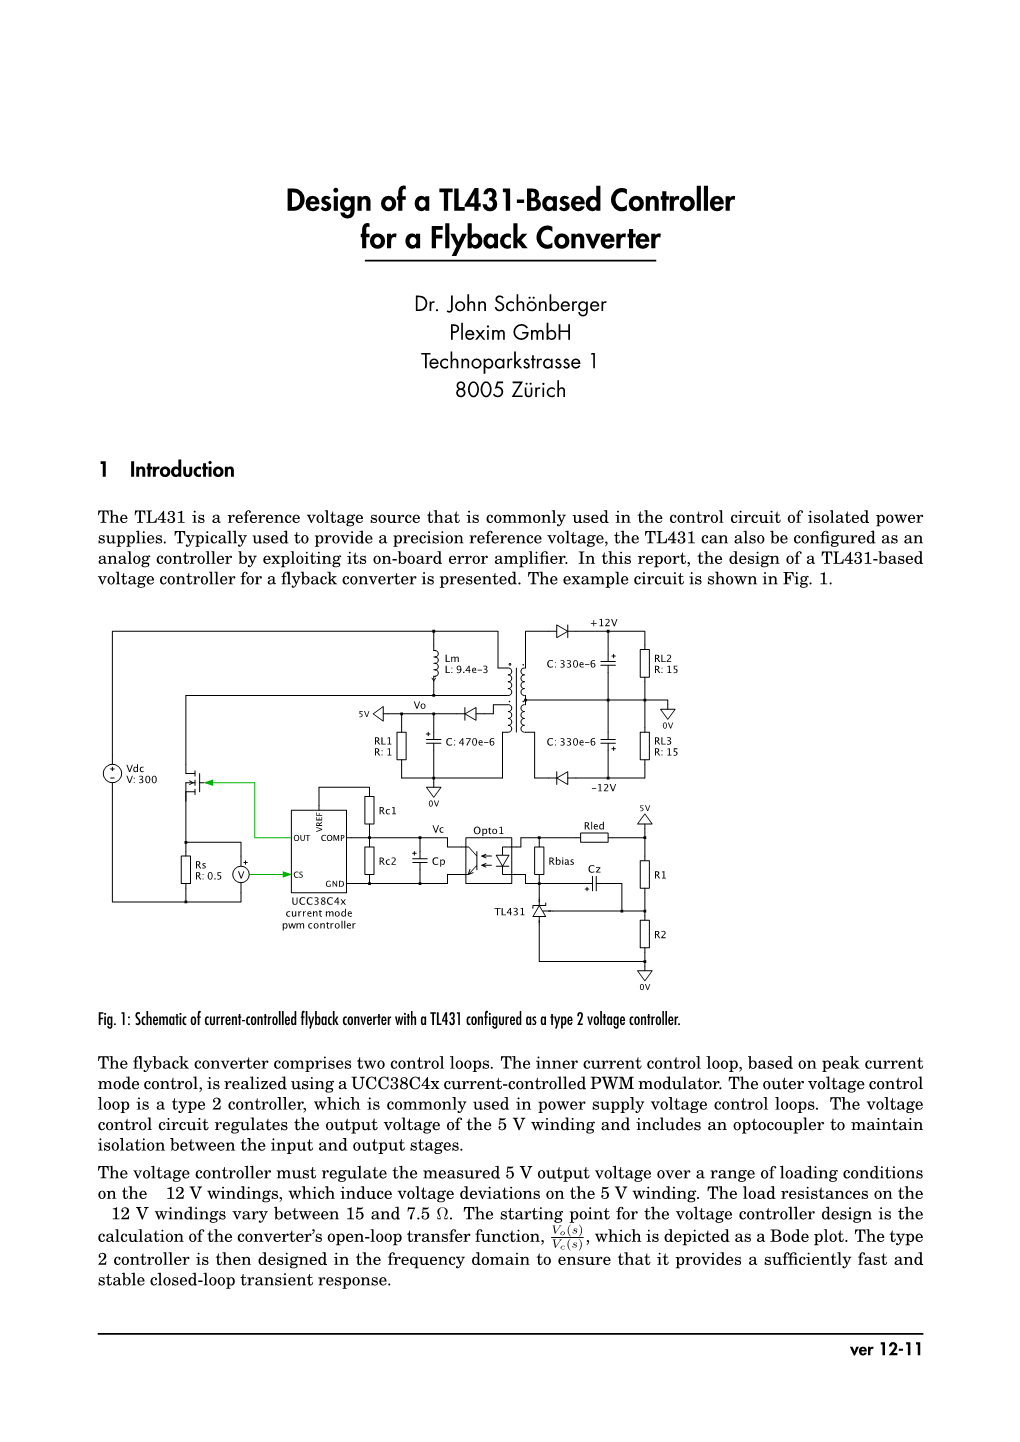 Design of a TL431-Based Controller for a Flyback Converter